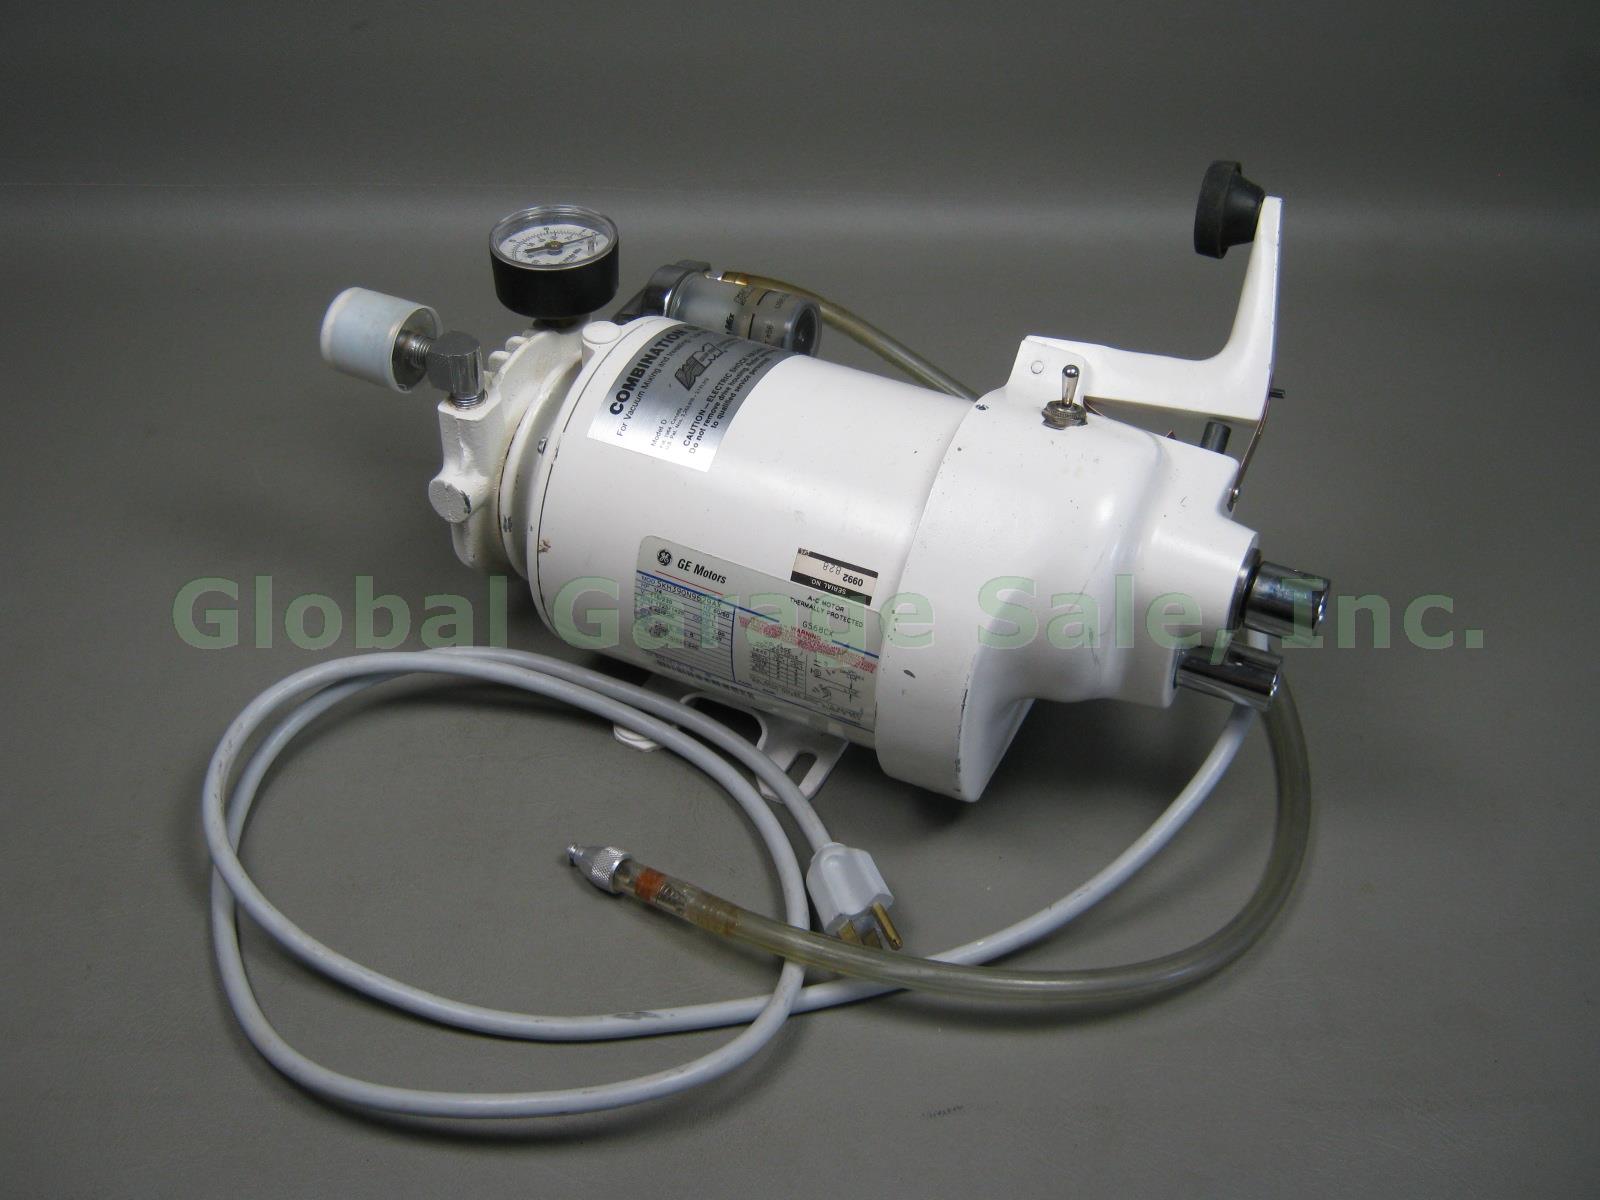 Whip Mix Combination Unit Dental Lab Vacuum Mixer D W/ GE 1/4HP 115/230V Motor